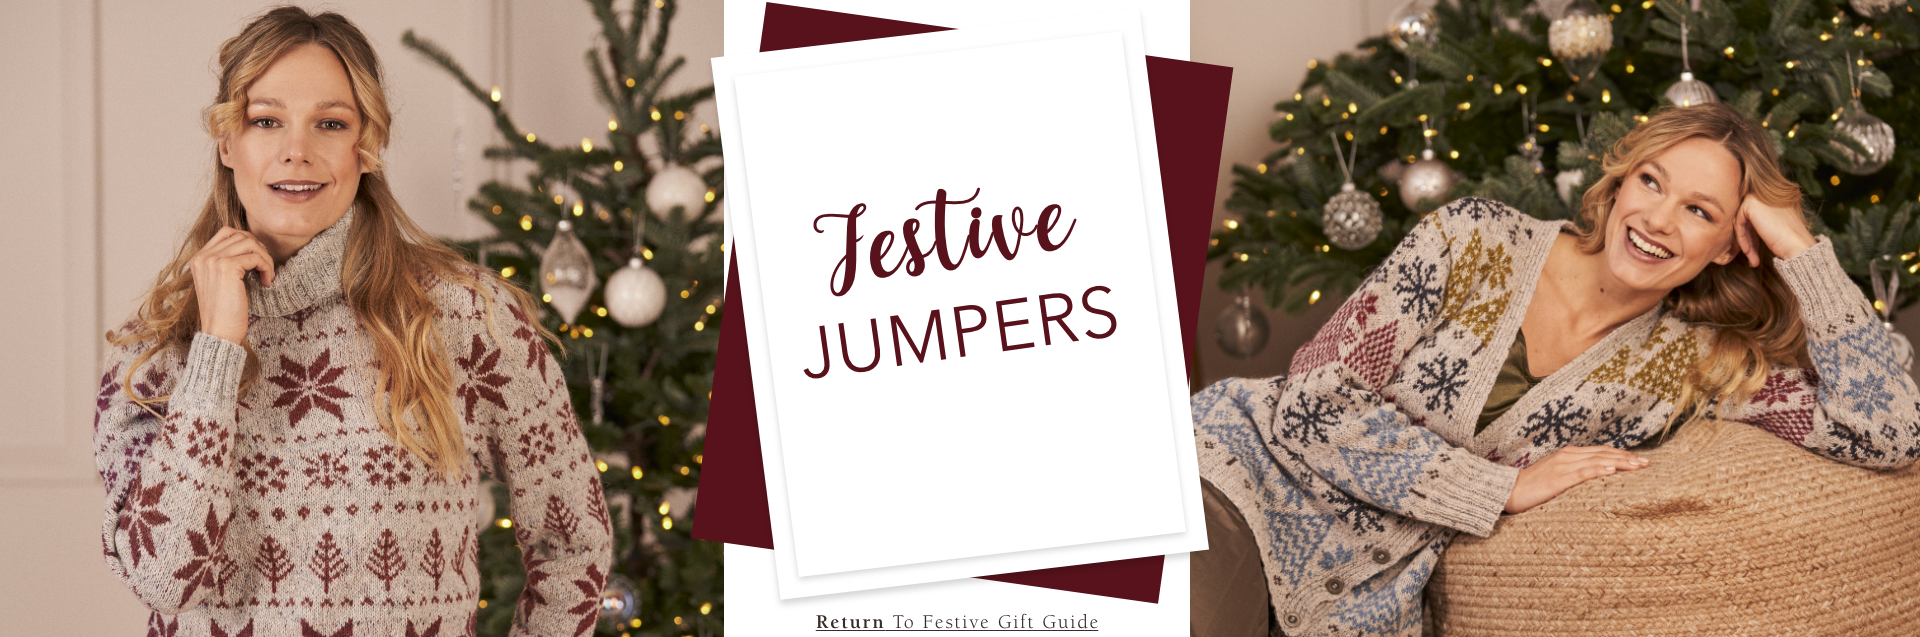 Festive Jumpers banner